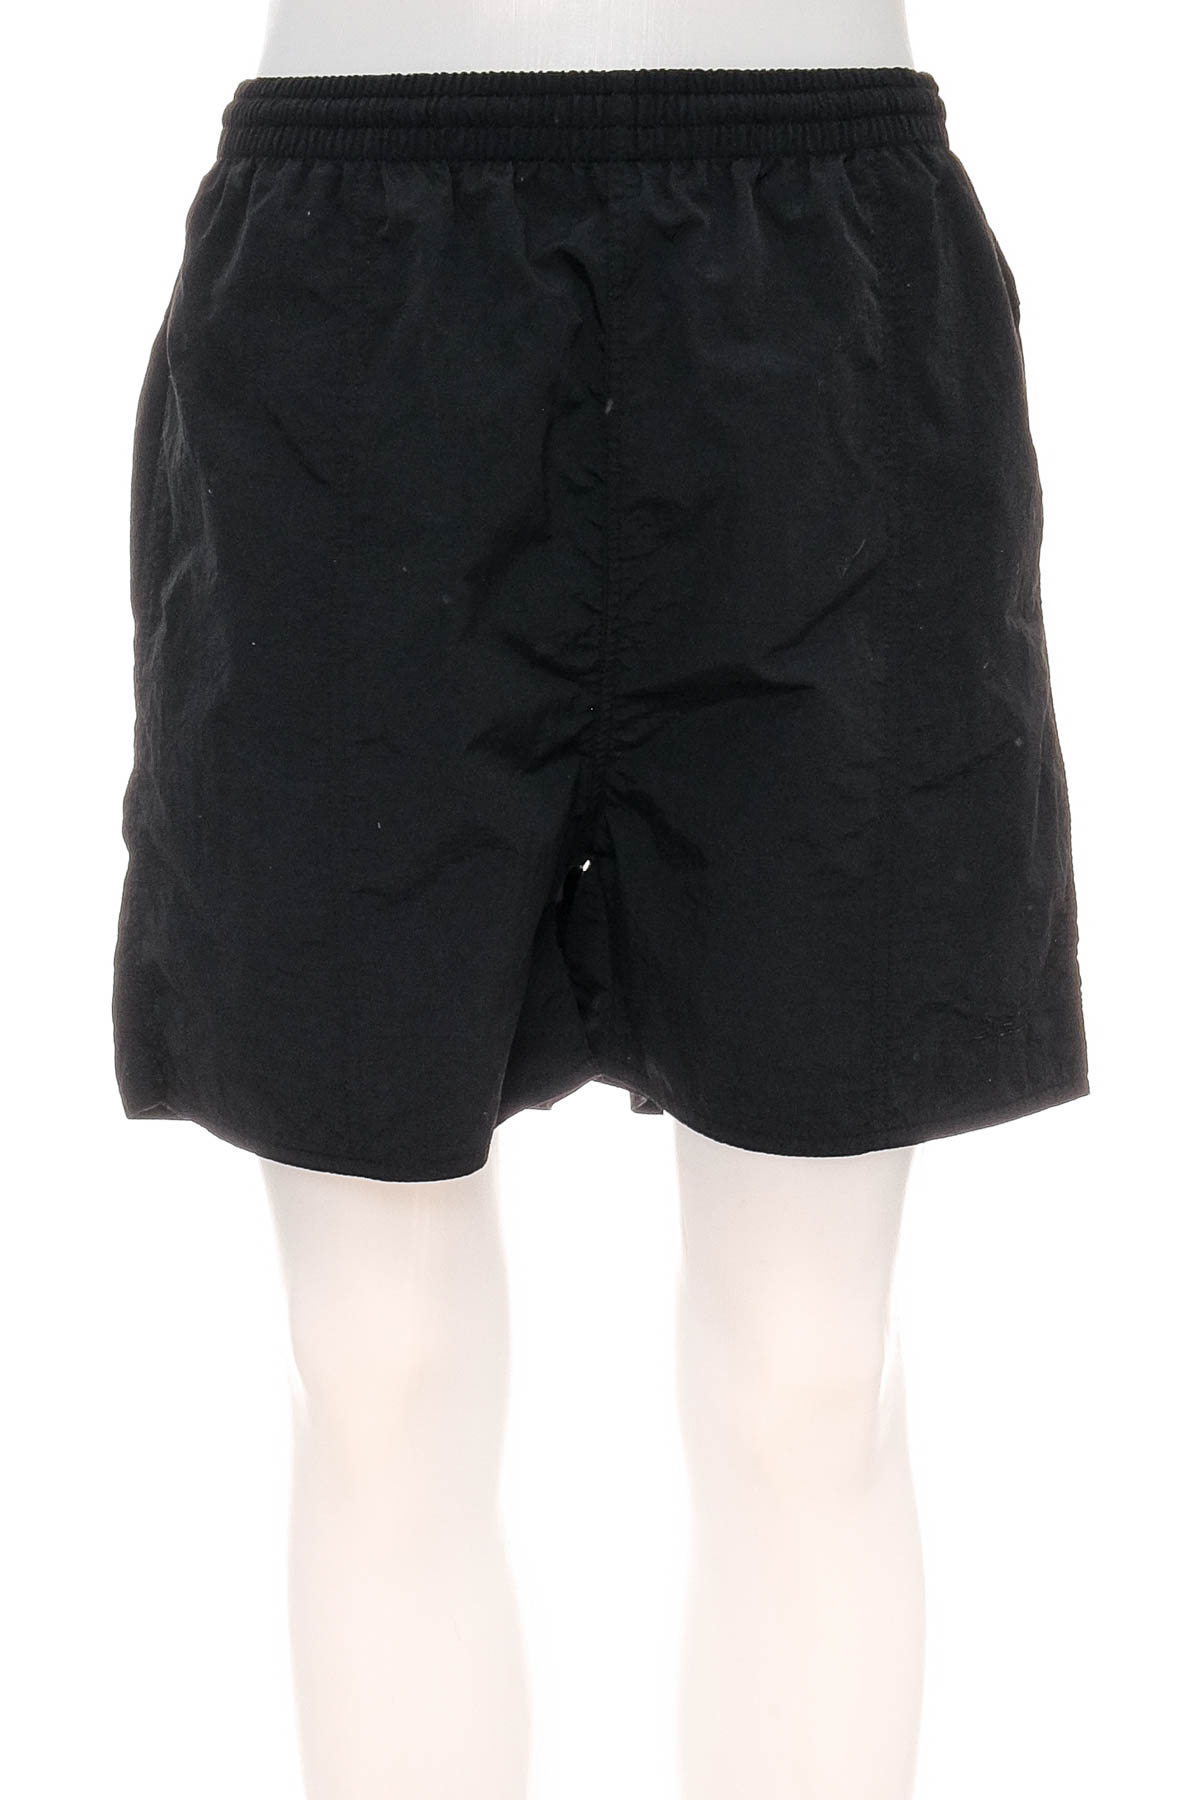 Men's shorts - Beco - 0